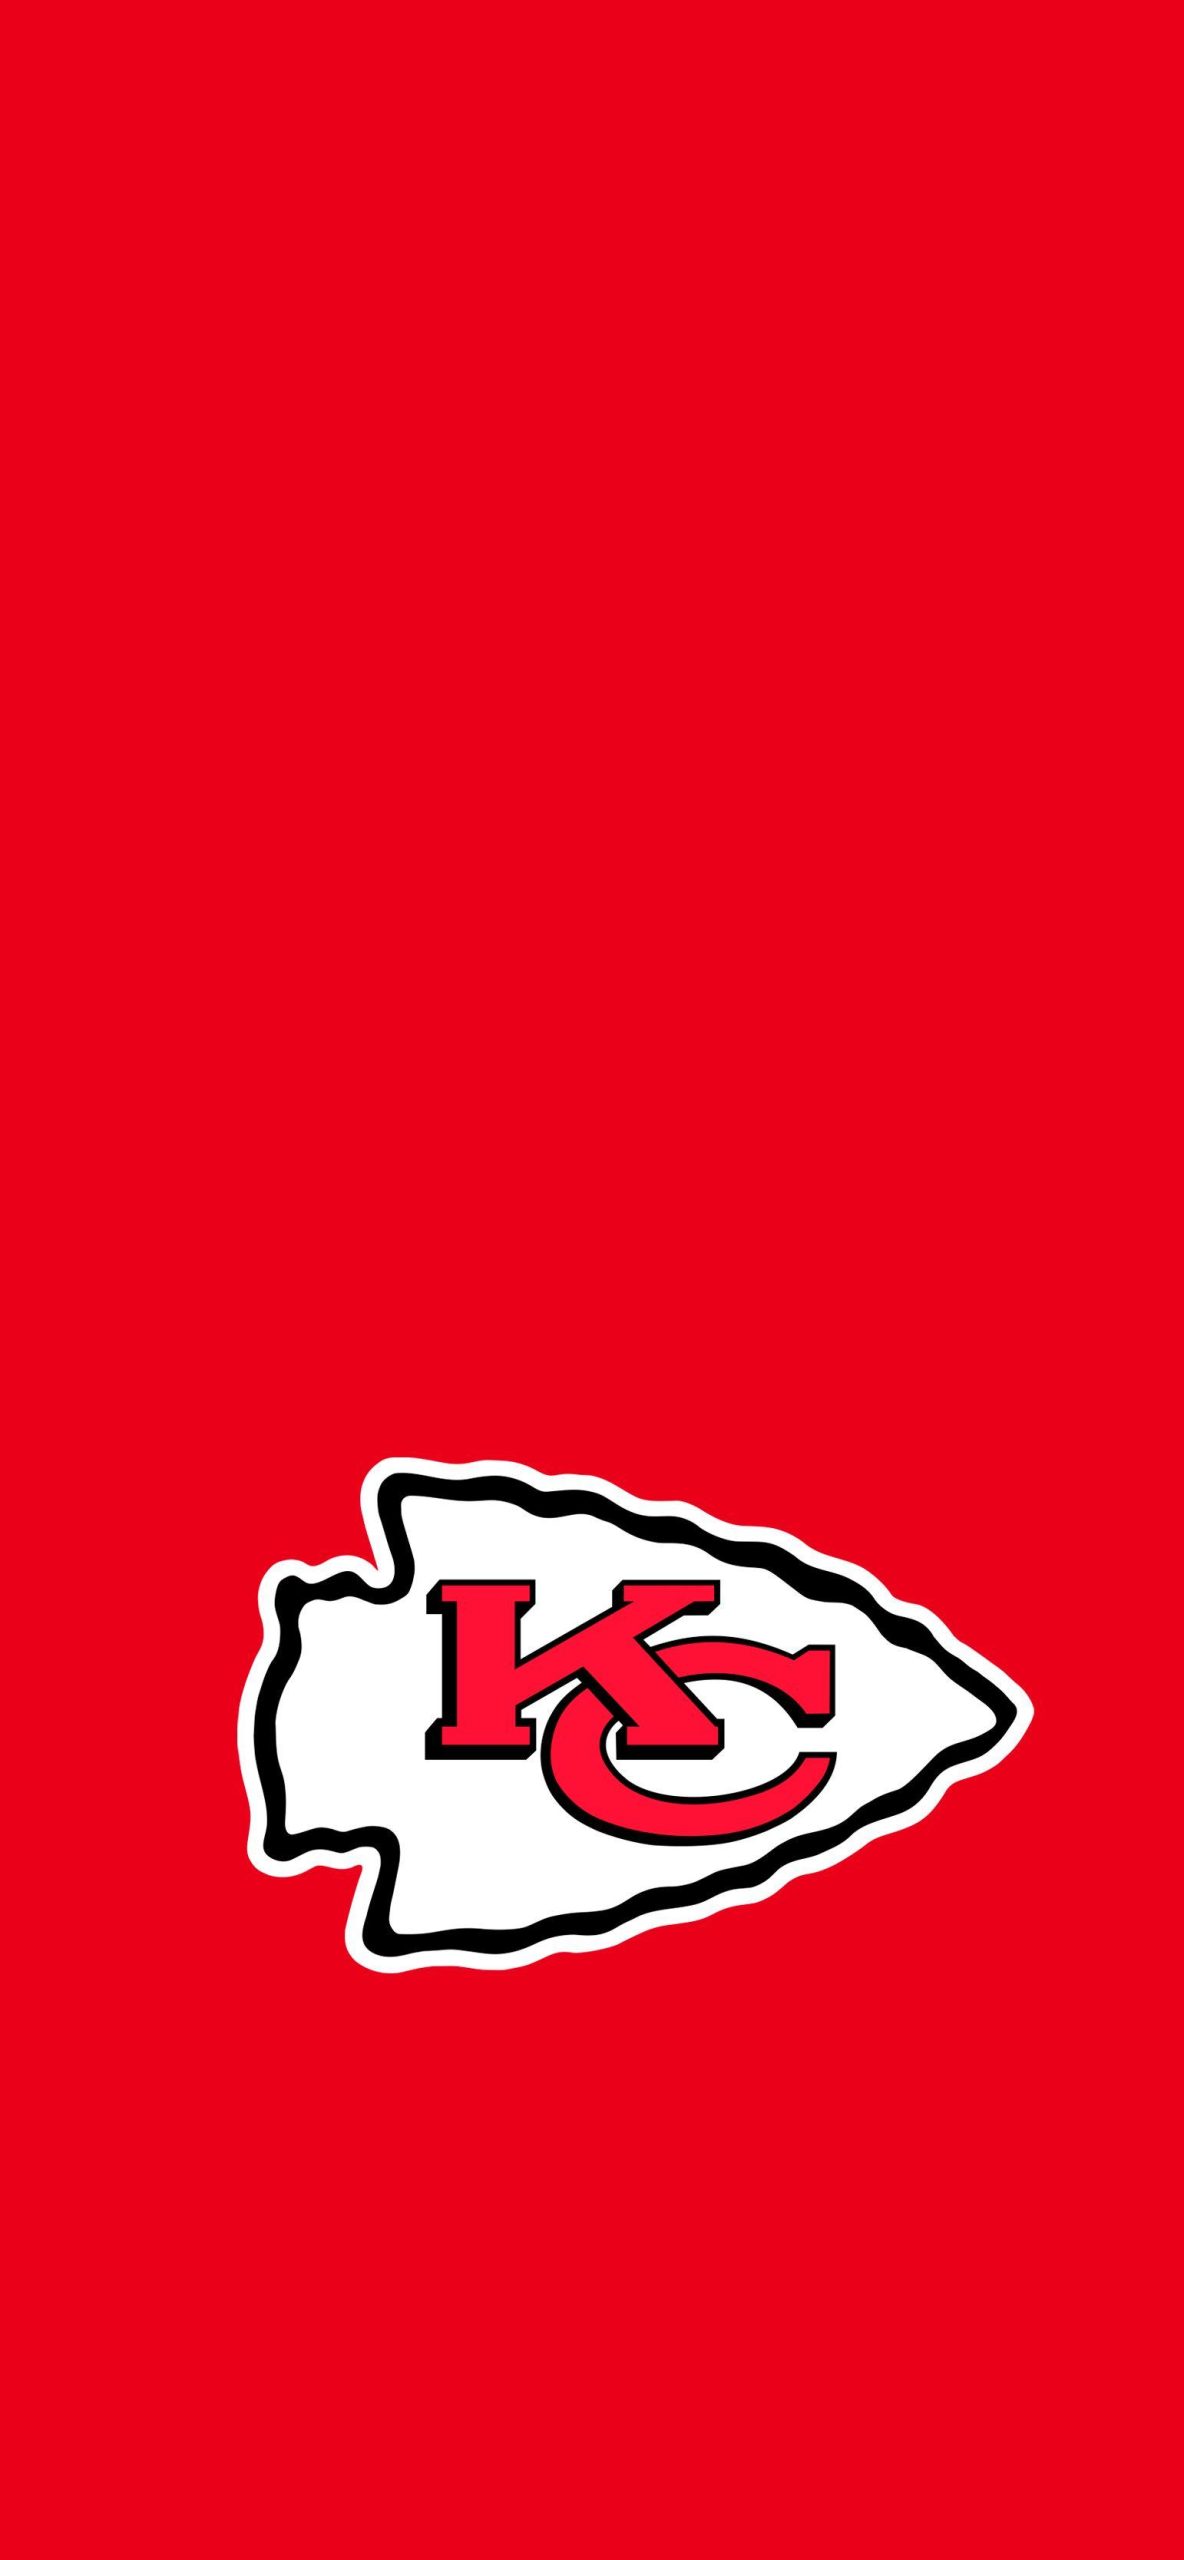 Kansas City Chiefs iPhone Wallpaper 4k, Kansas City Chiefs iPhone, Sports